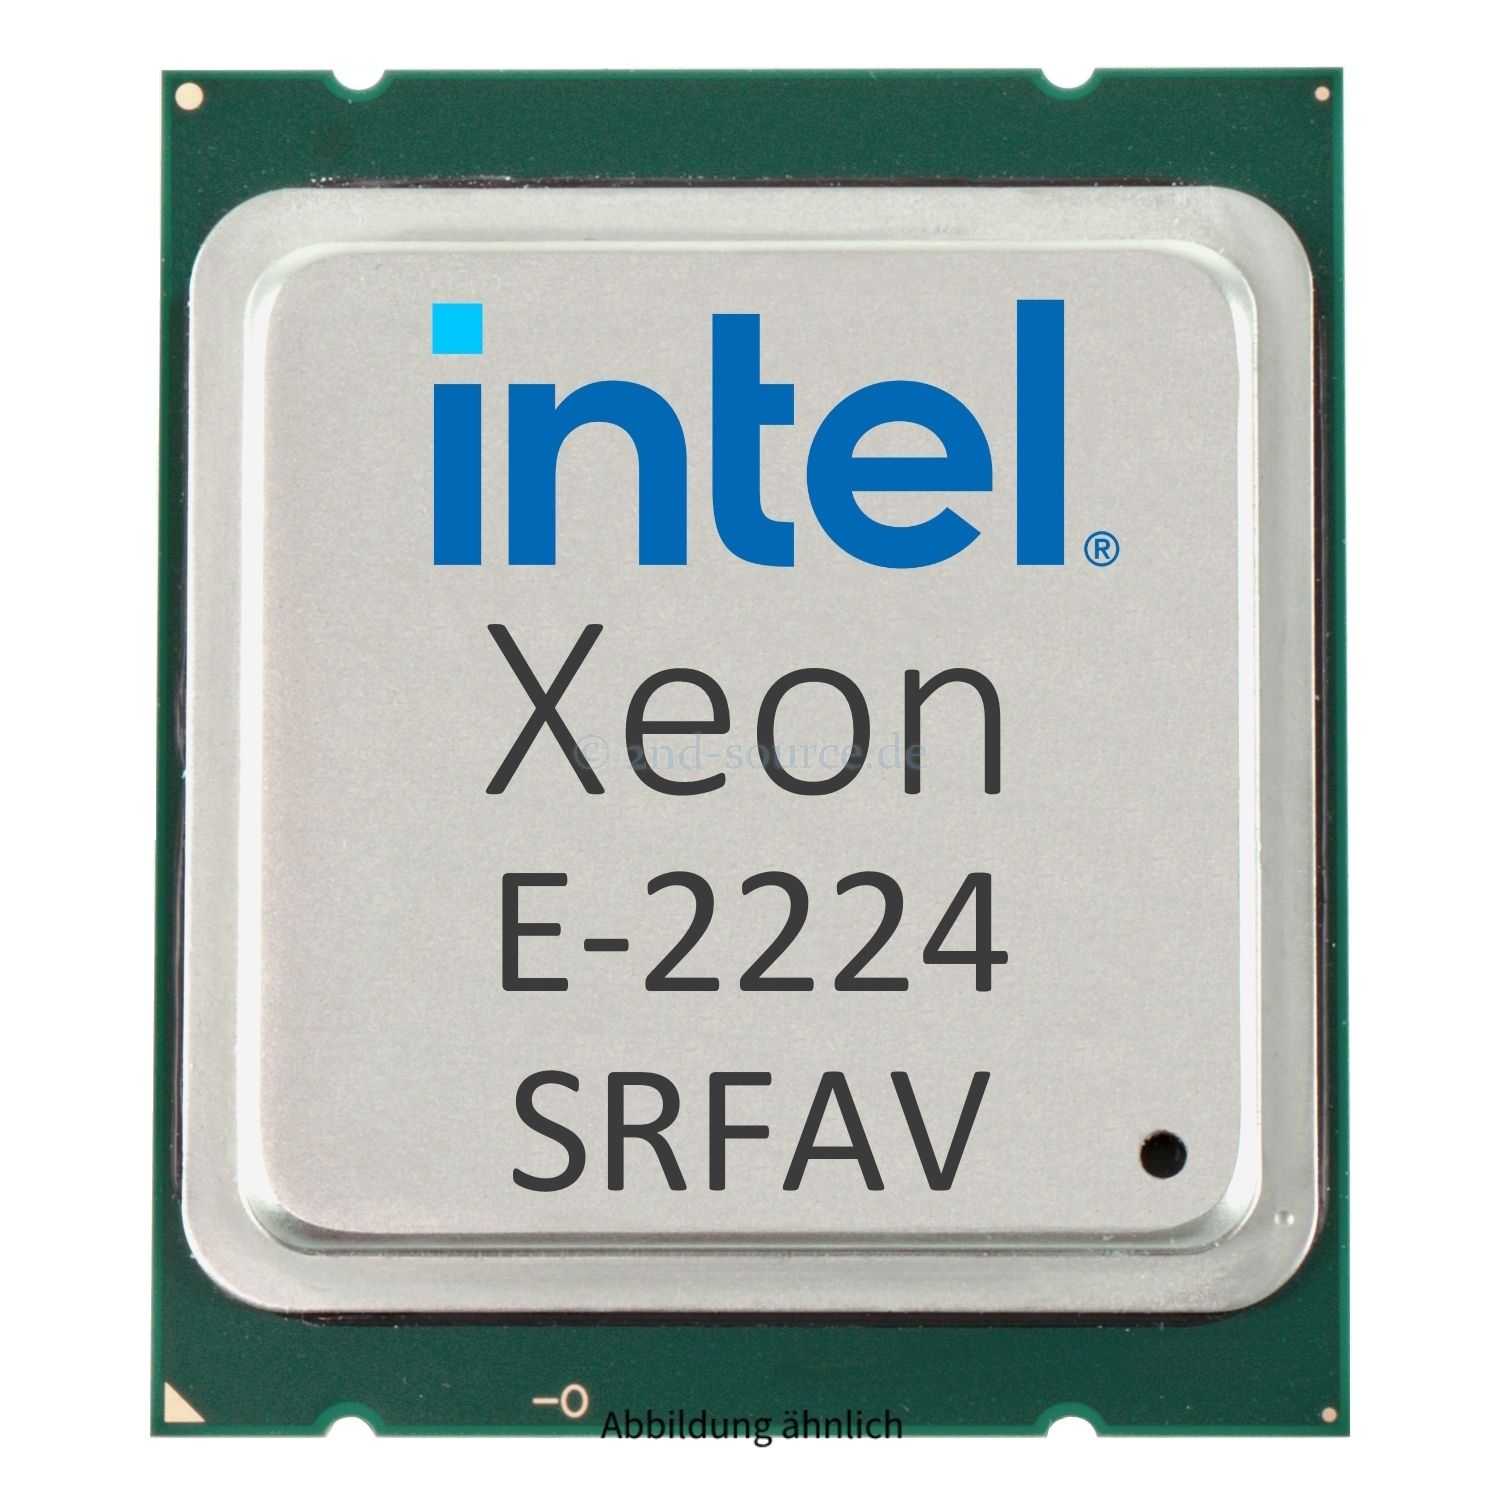 Intel Xeon E-2224 3.40GHz 8MB 4 Core CPU 71W SRFAV CM8068404174707